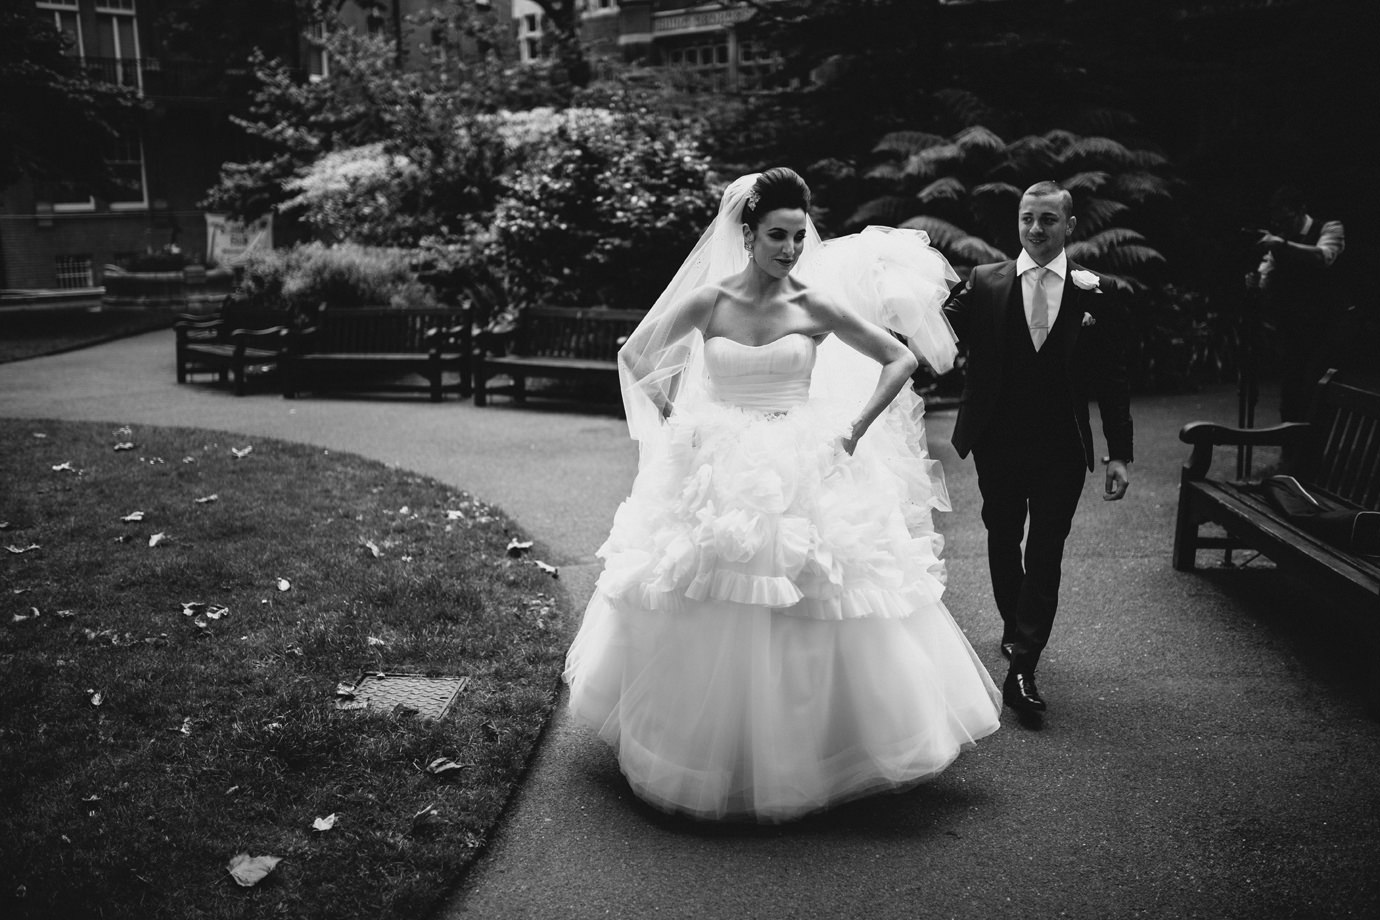 Bride and groom, Mount Stree t Gardens, Mayfair